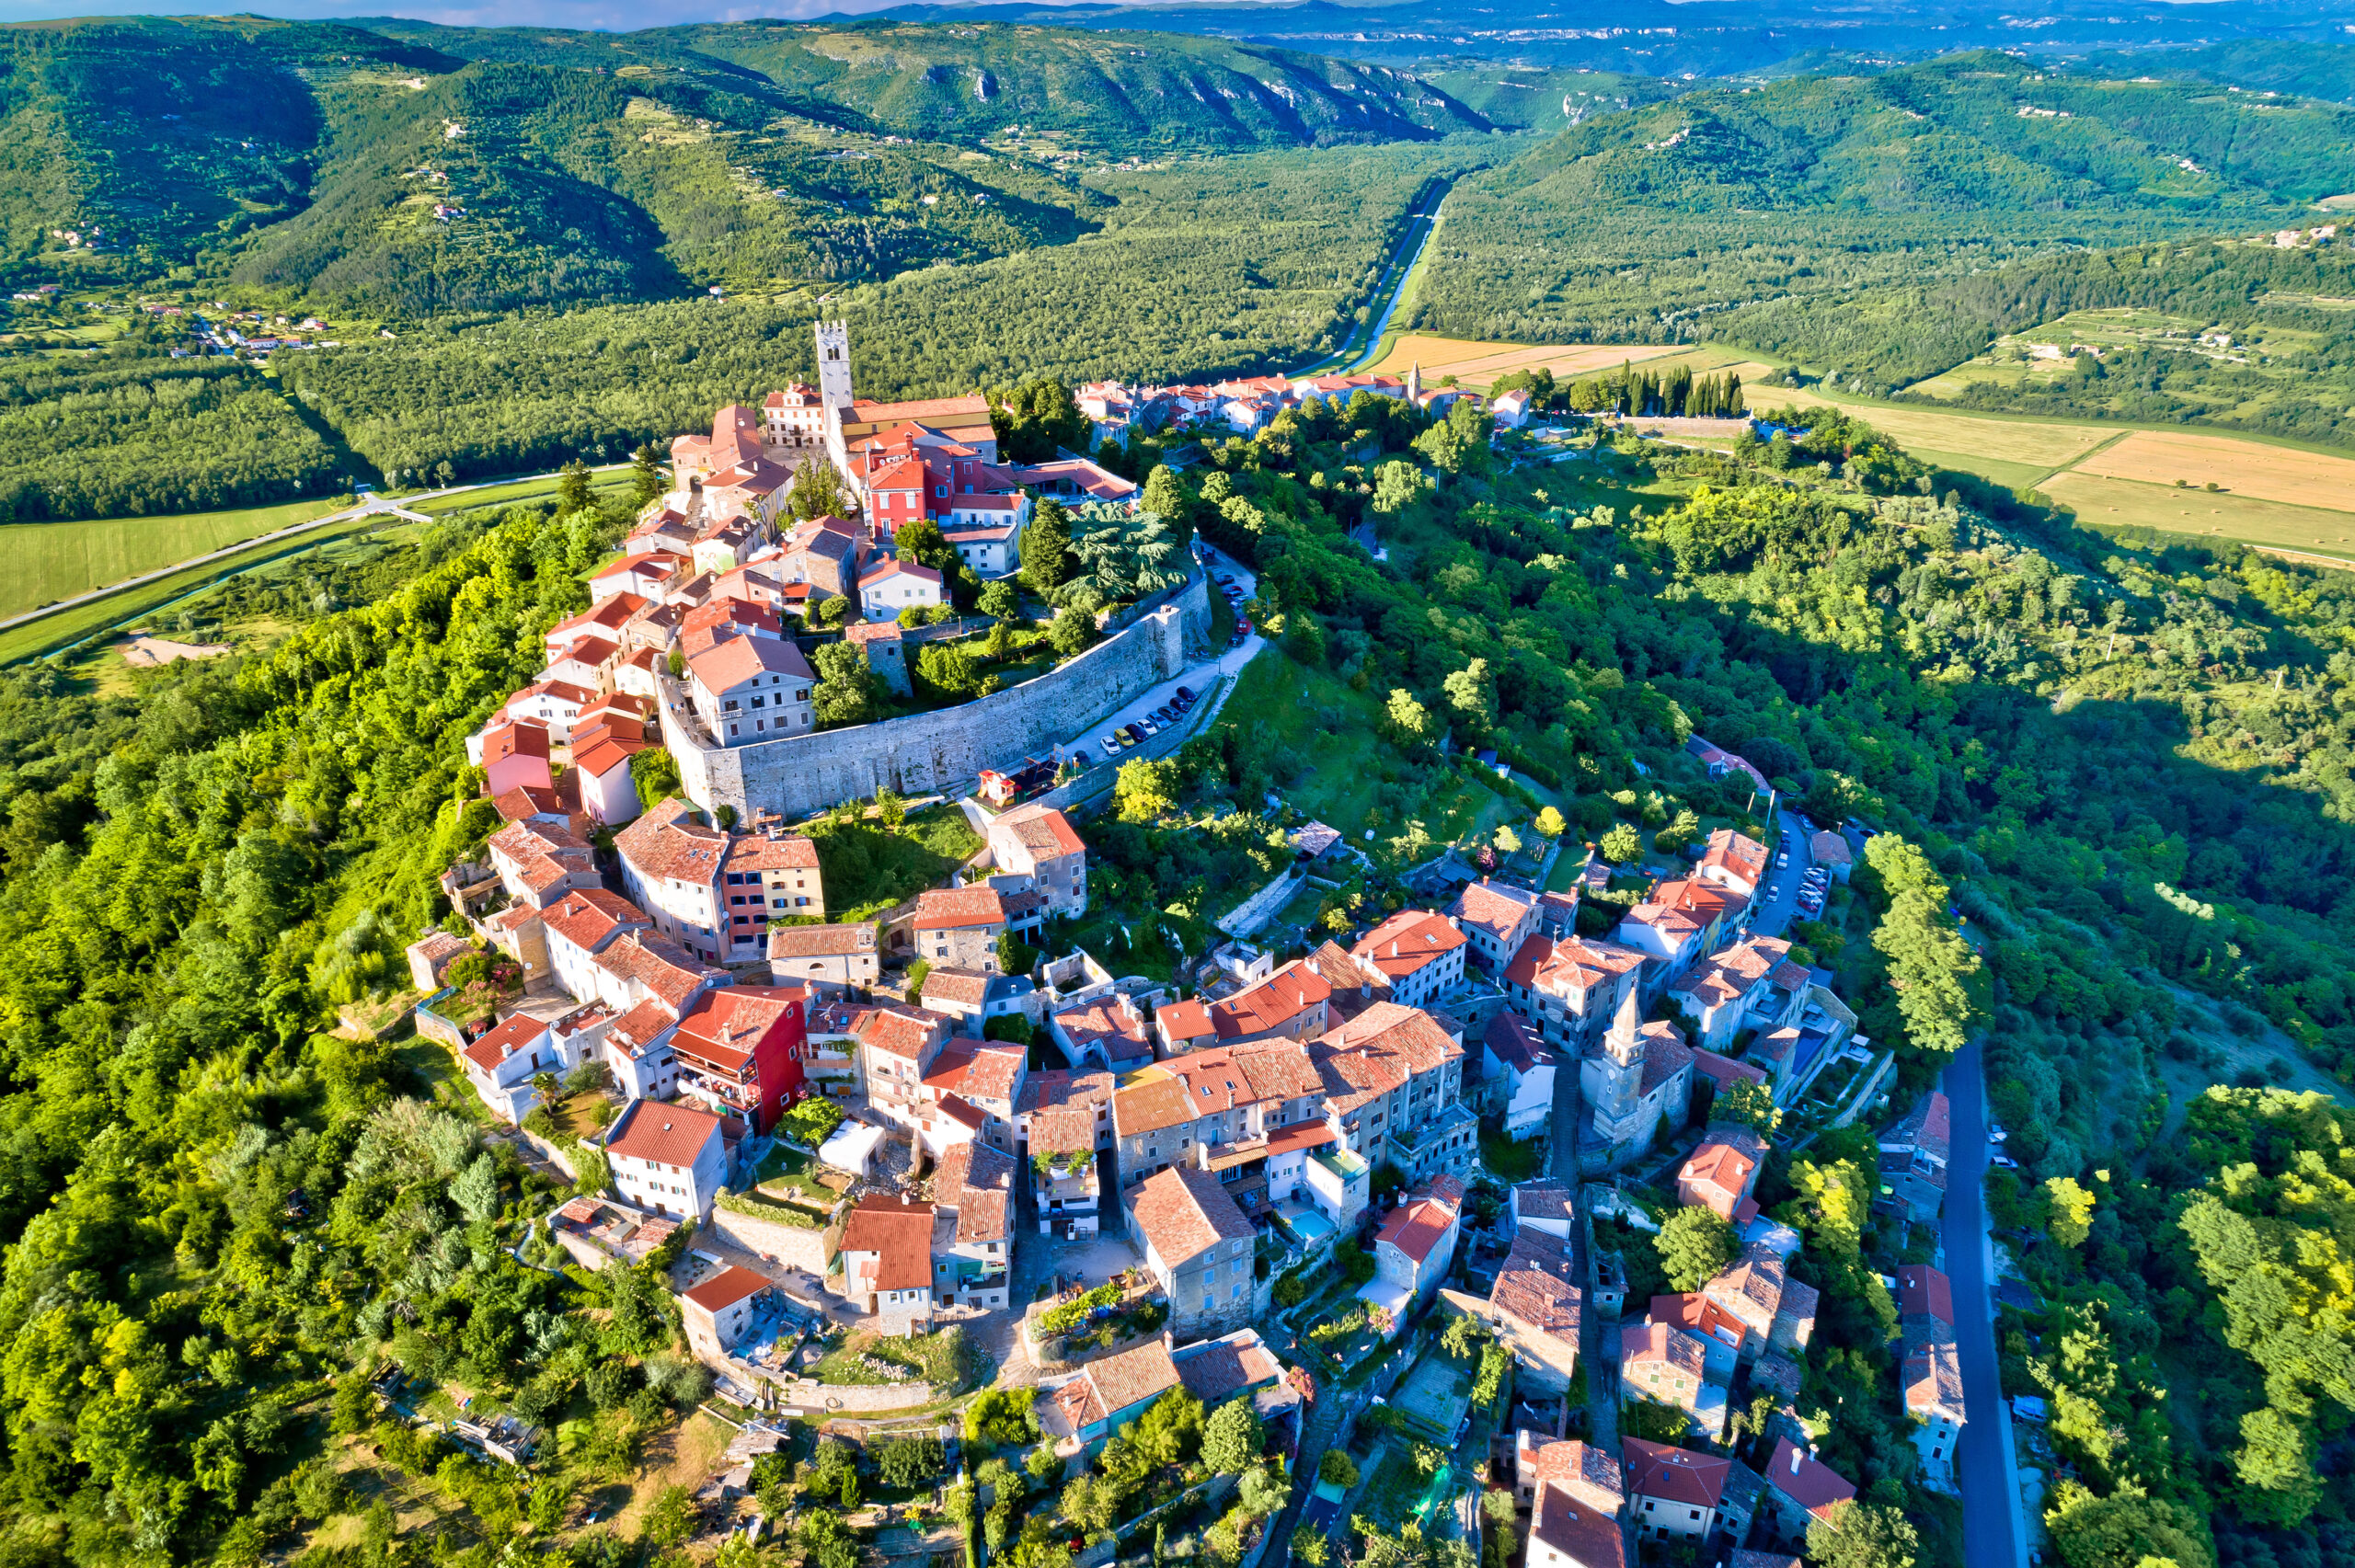 Town of Motovun in Istria